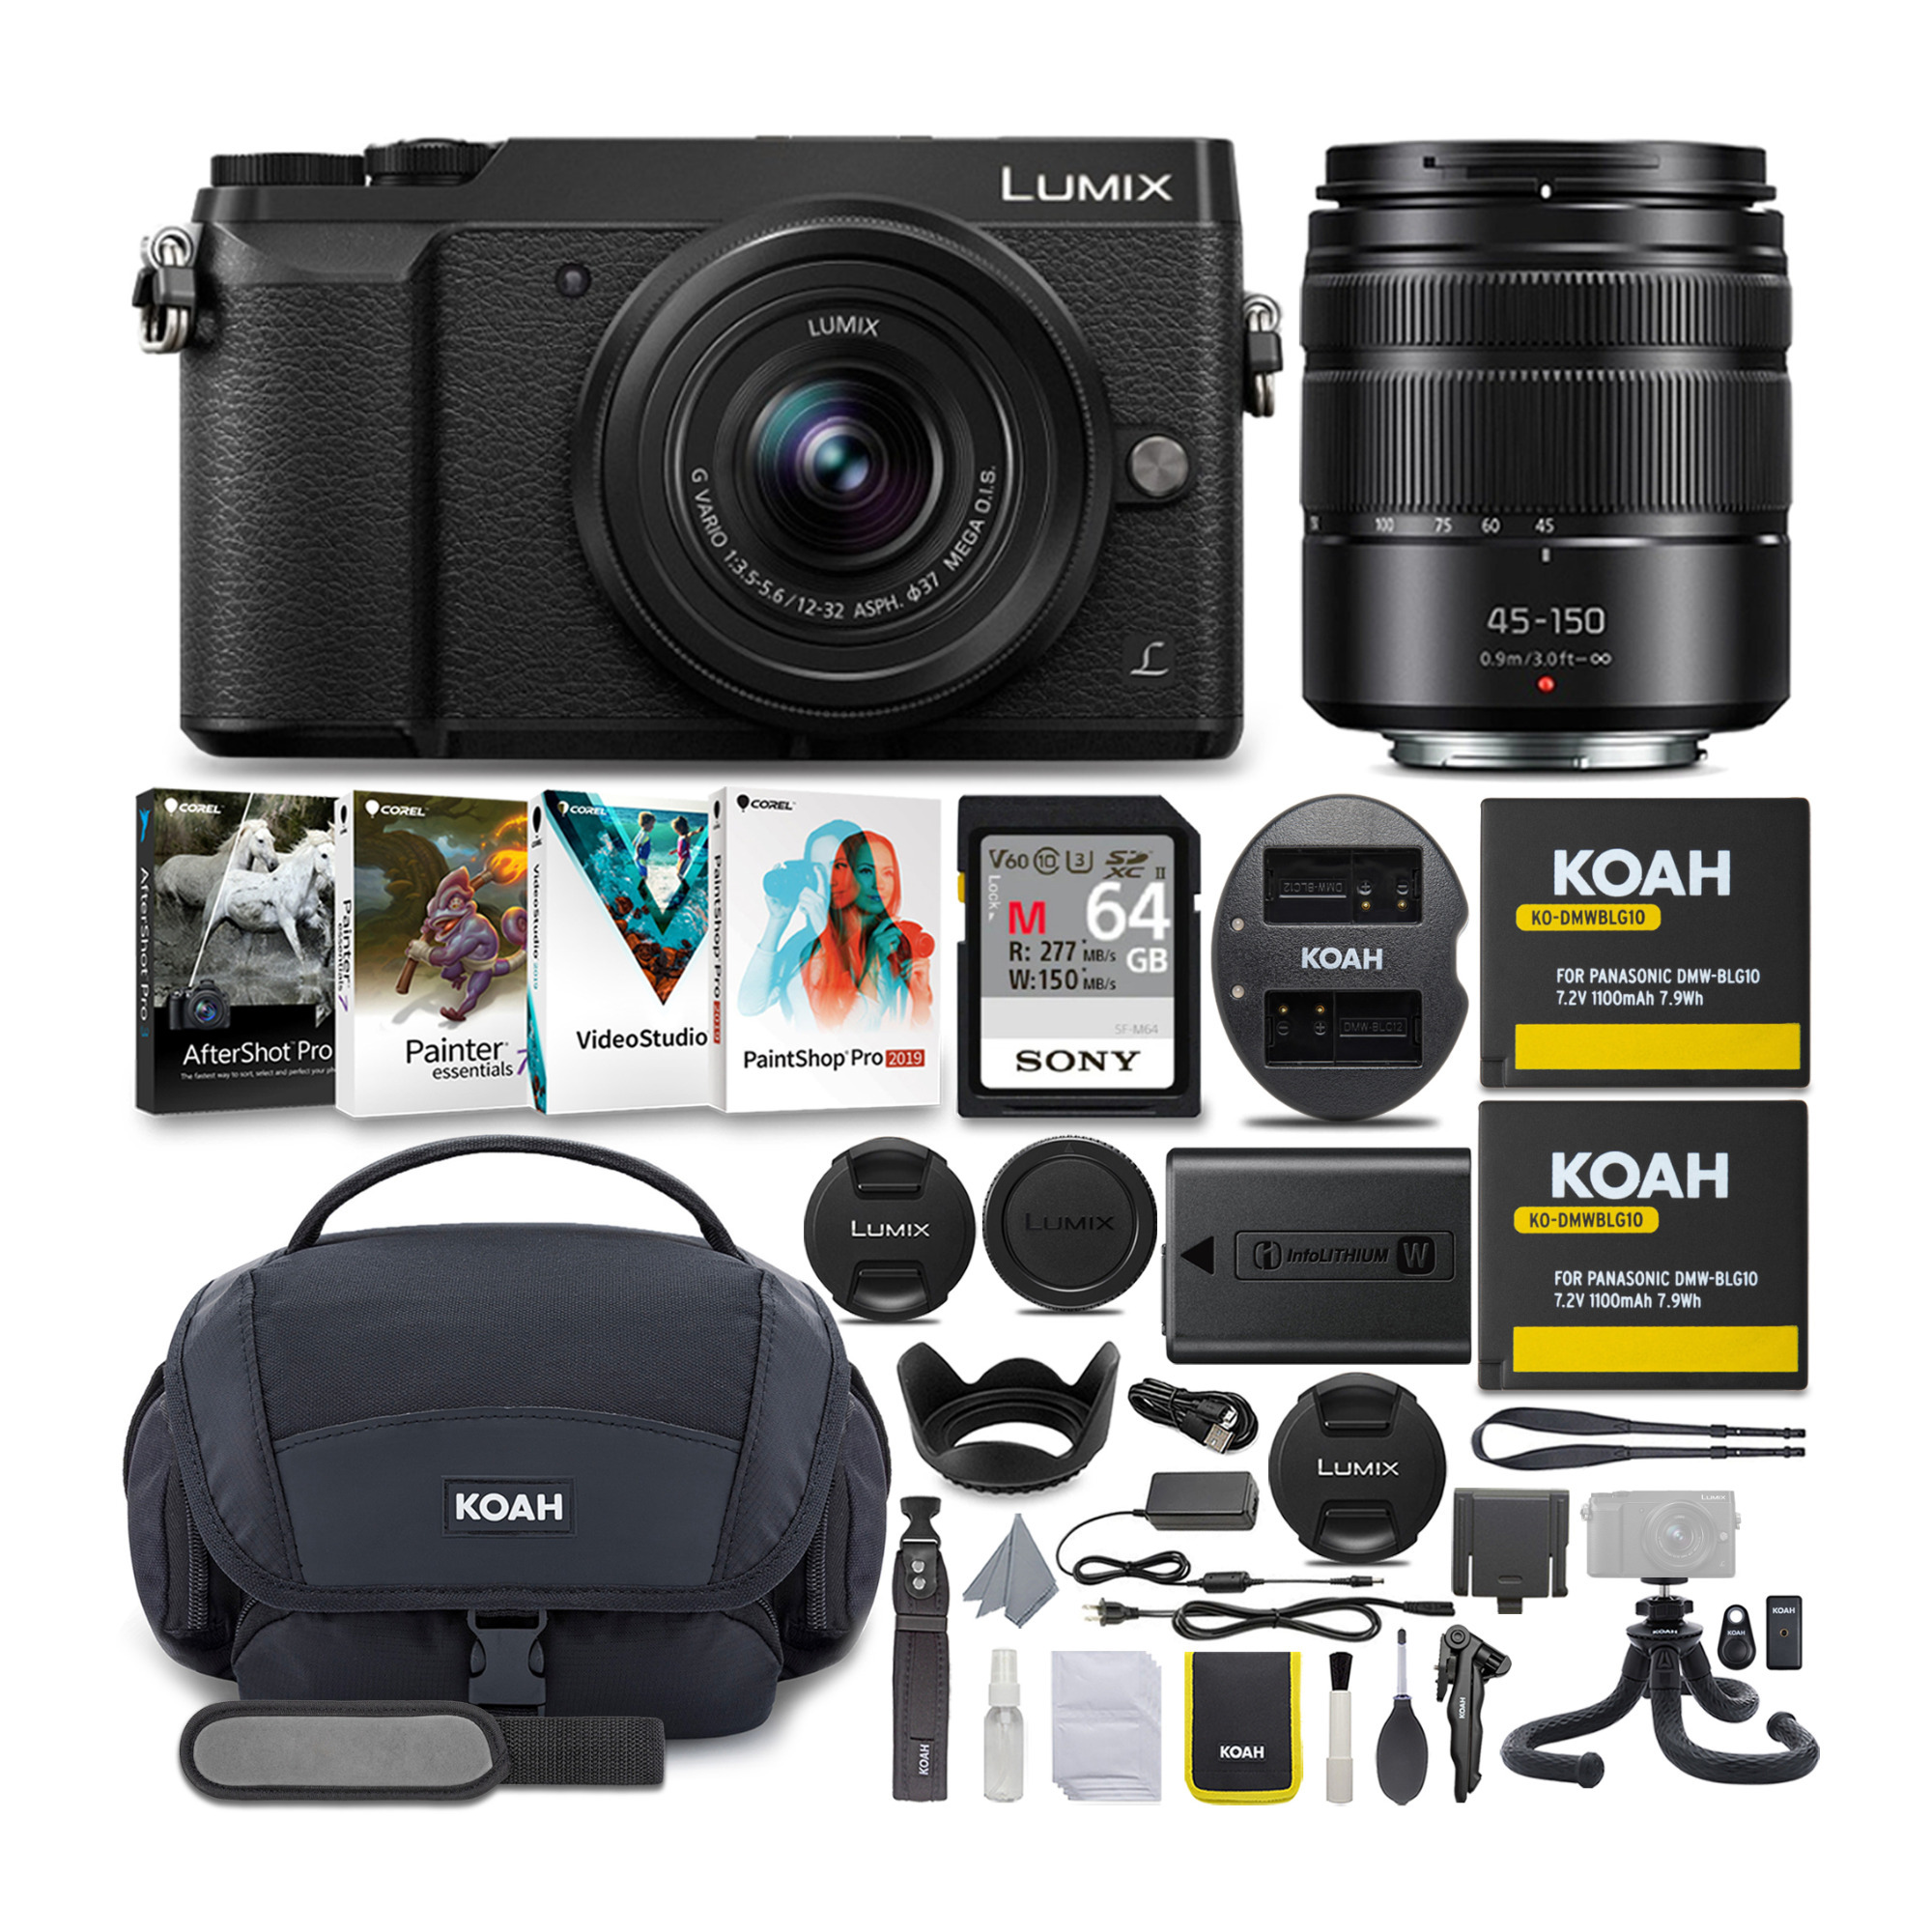 Panasonic LUMIX GX85 Mirrorless Camera with 12-32mm and 45-150mm Lenses Holiday Bundle in Black